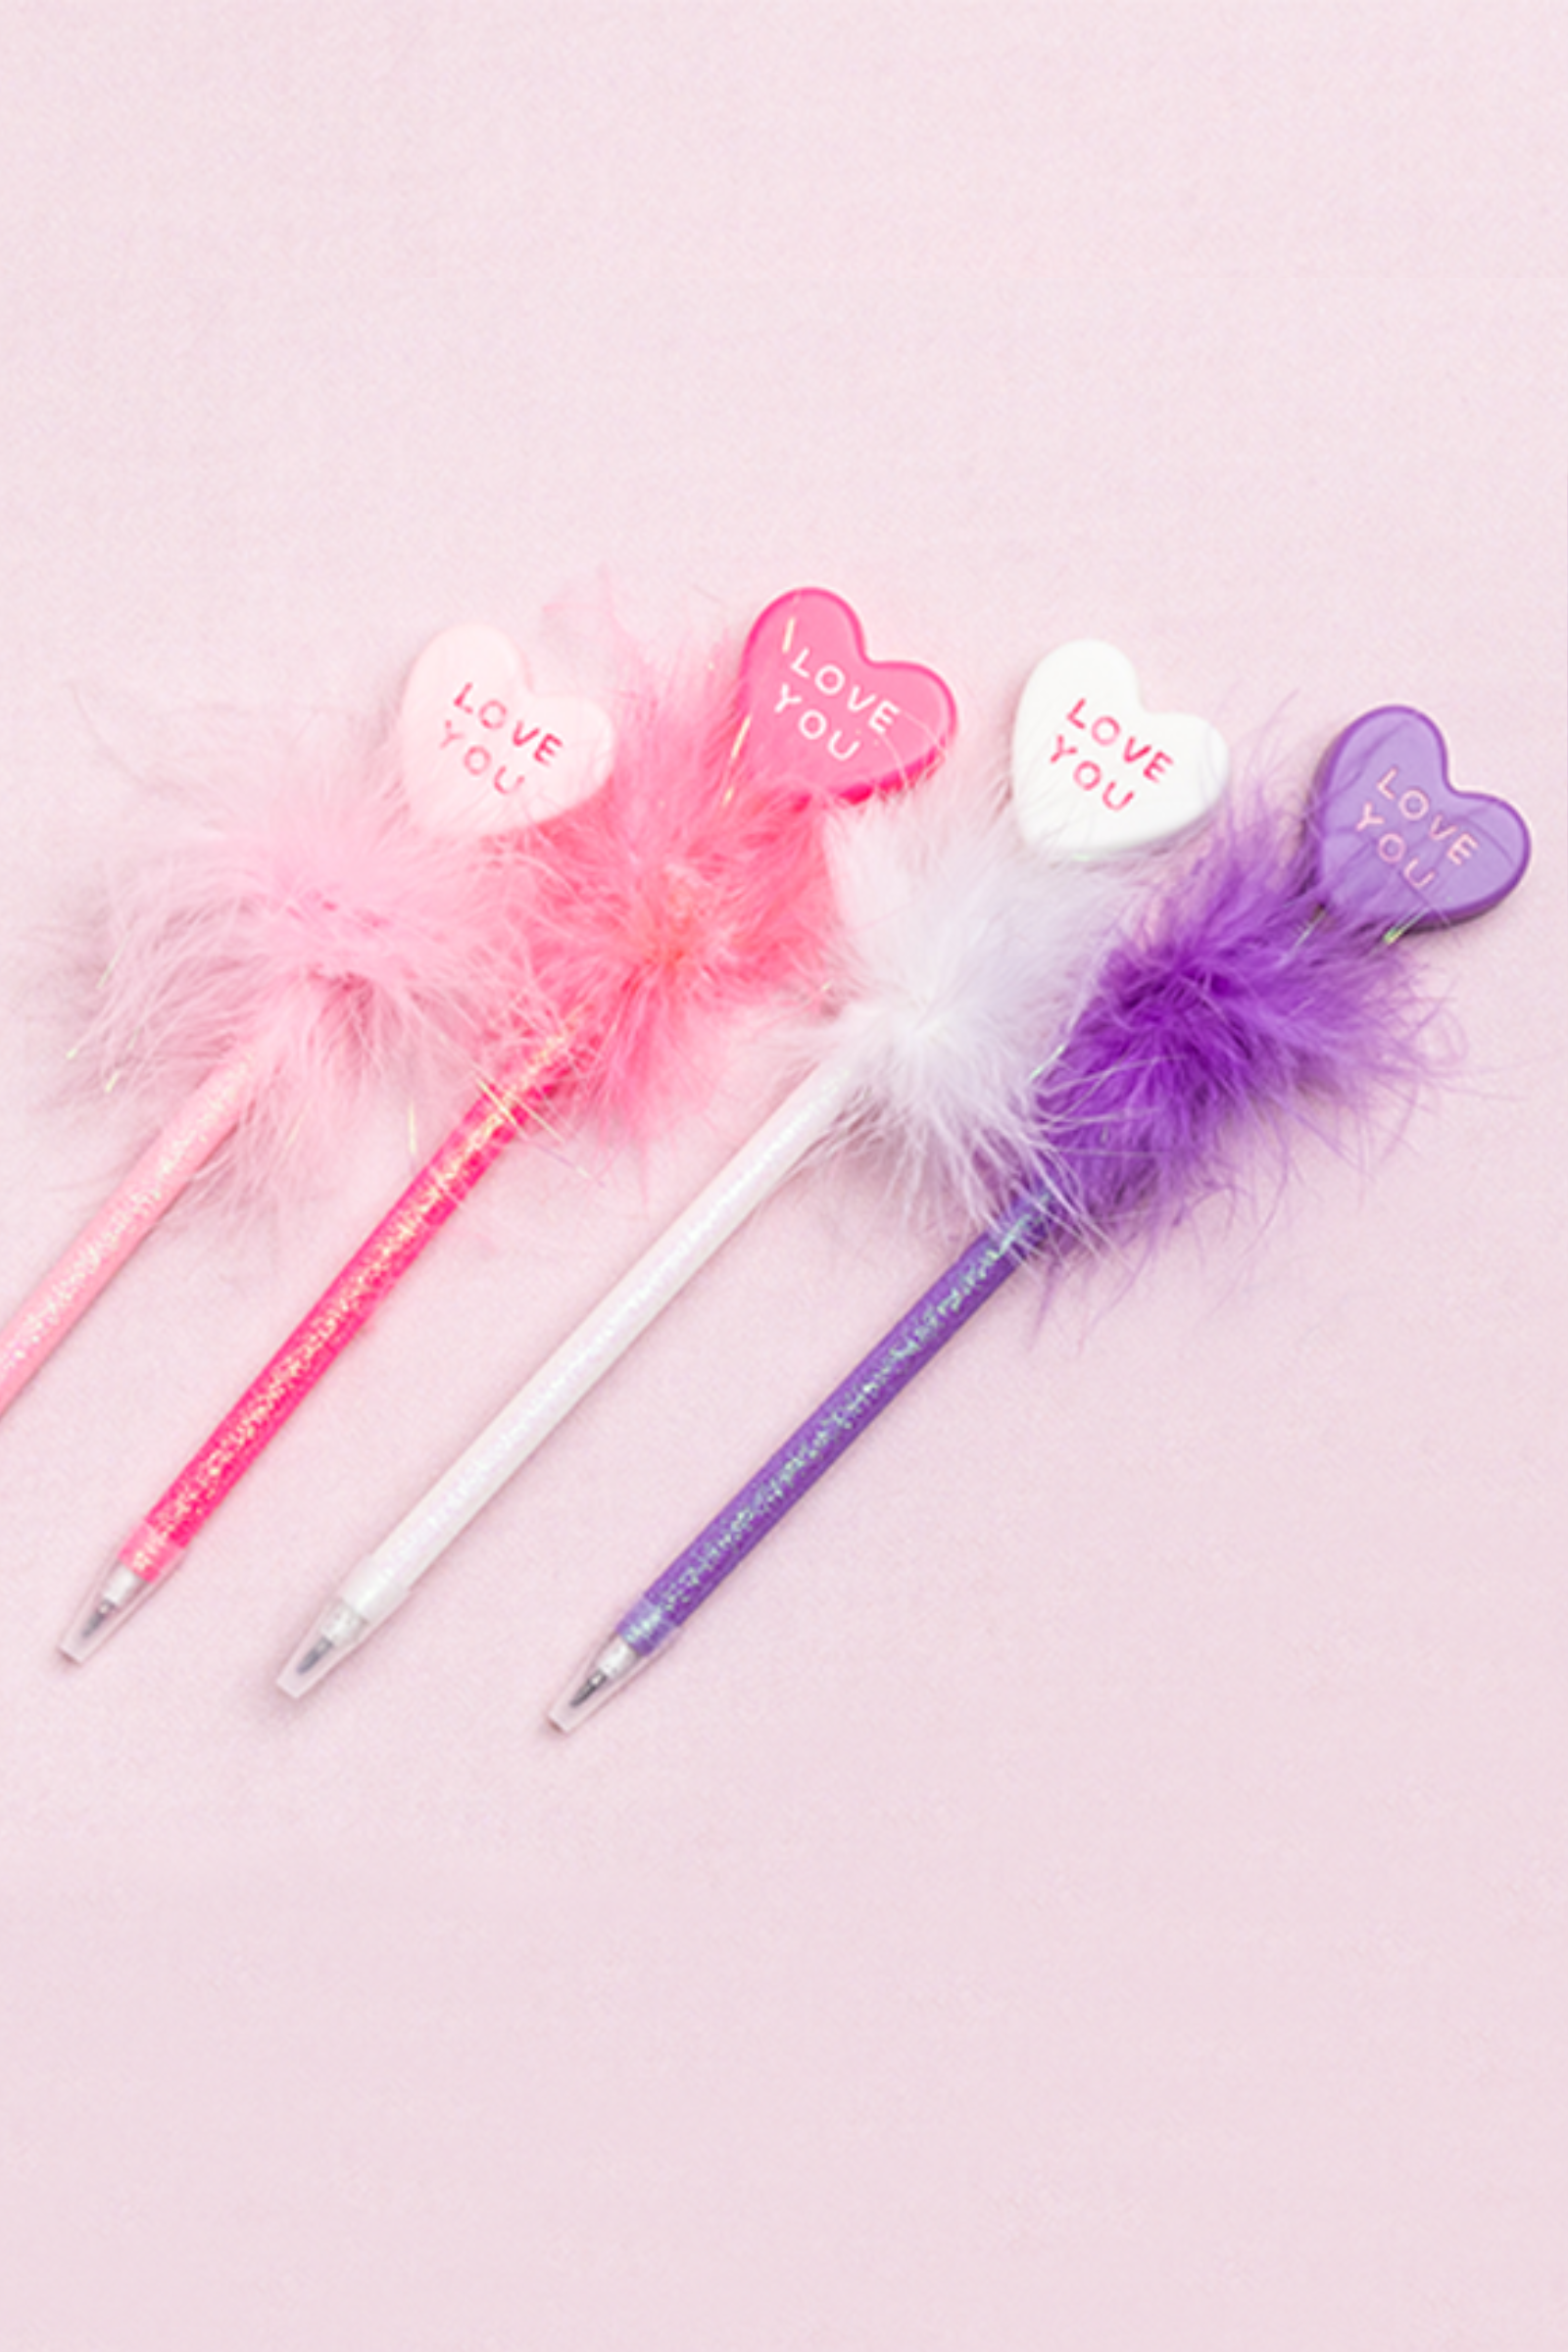 Sweet Heart Pens - 4 Pack